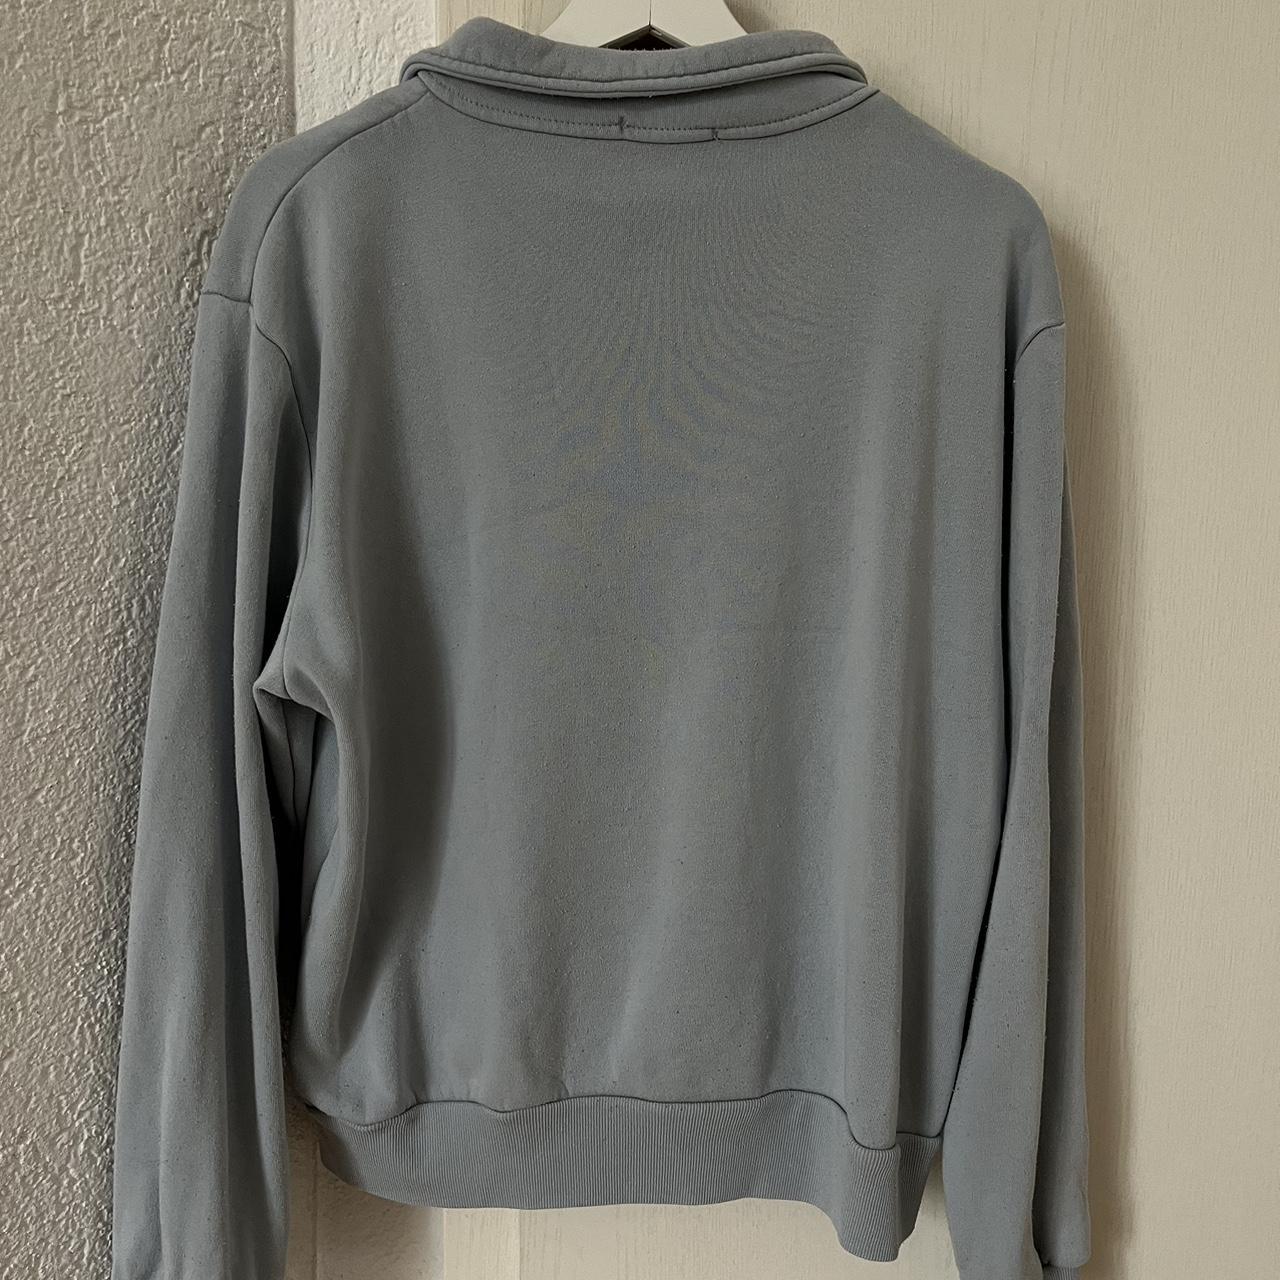 Brandy Melville Sweater, Fits Size... - Depop